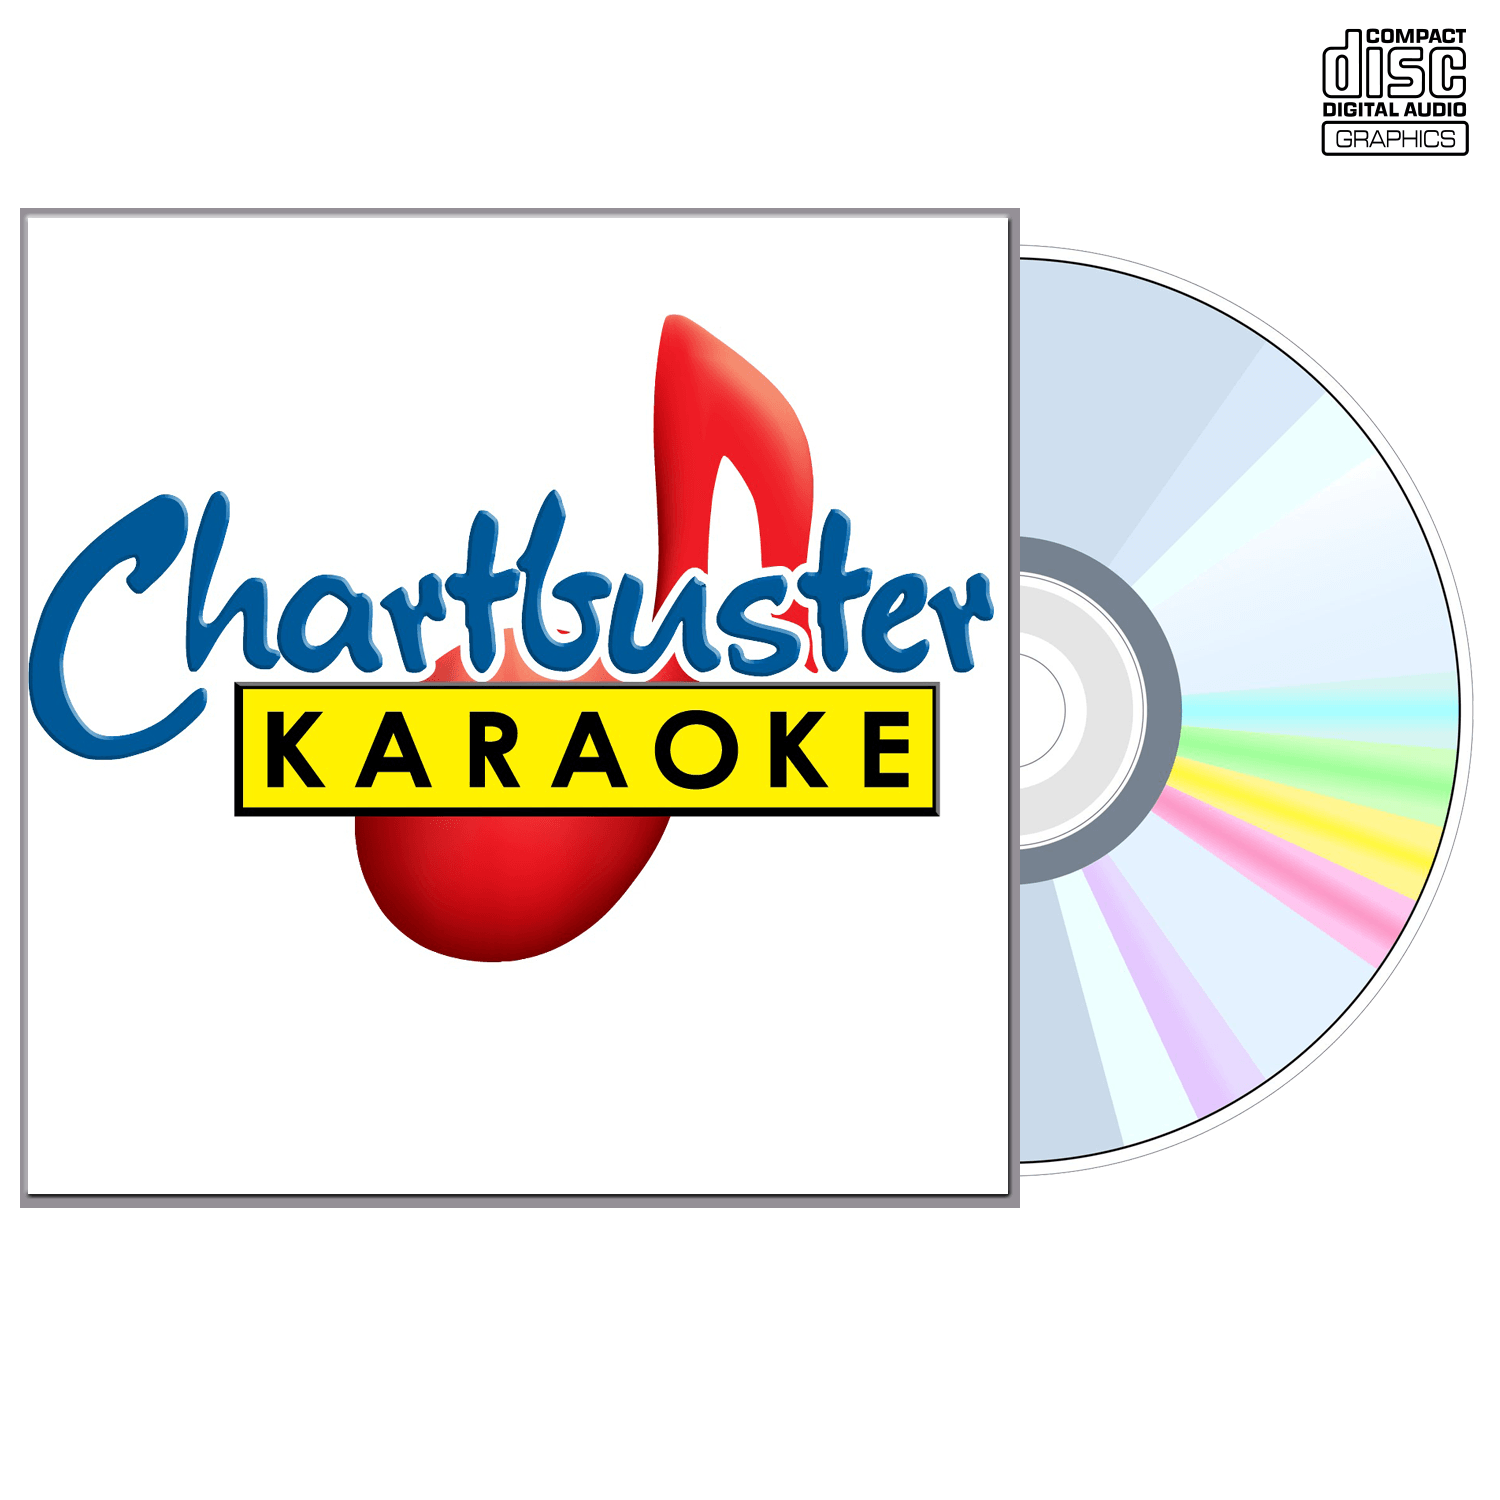 George Jones Vol 3 - CD+G - Chartbuster Karaoke - Karaoke Home Entertainment